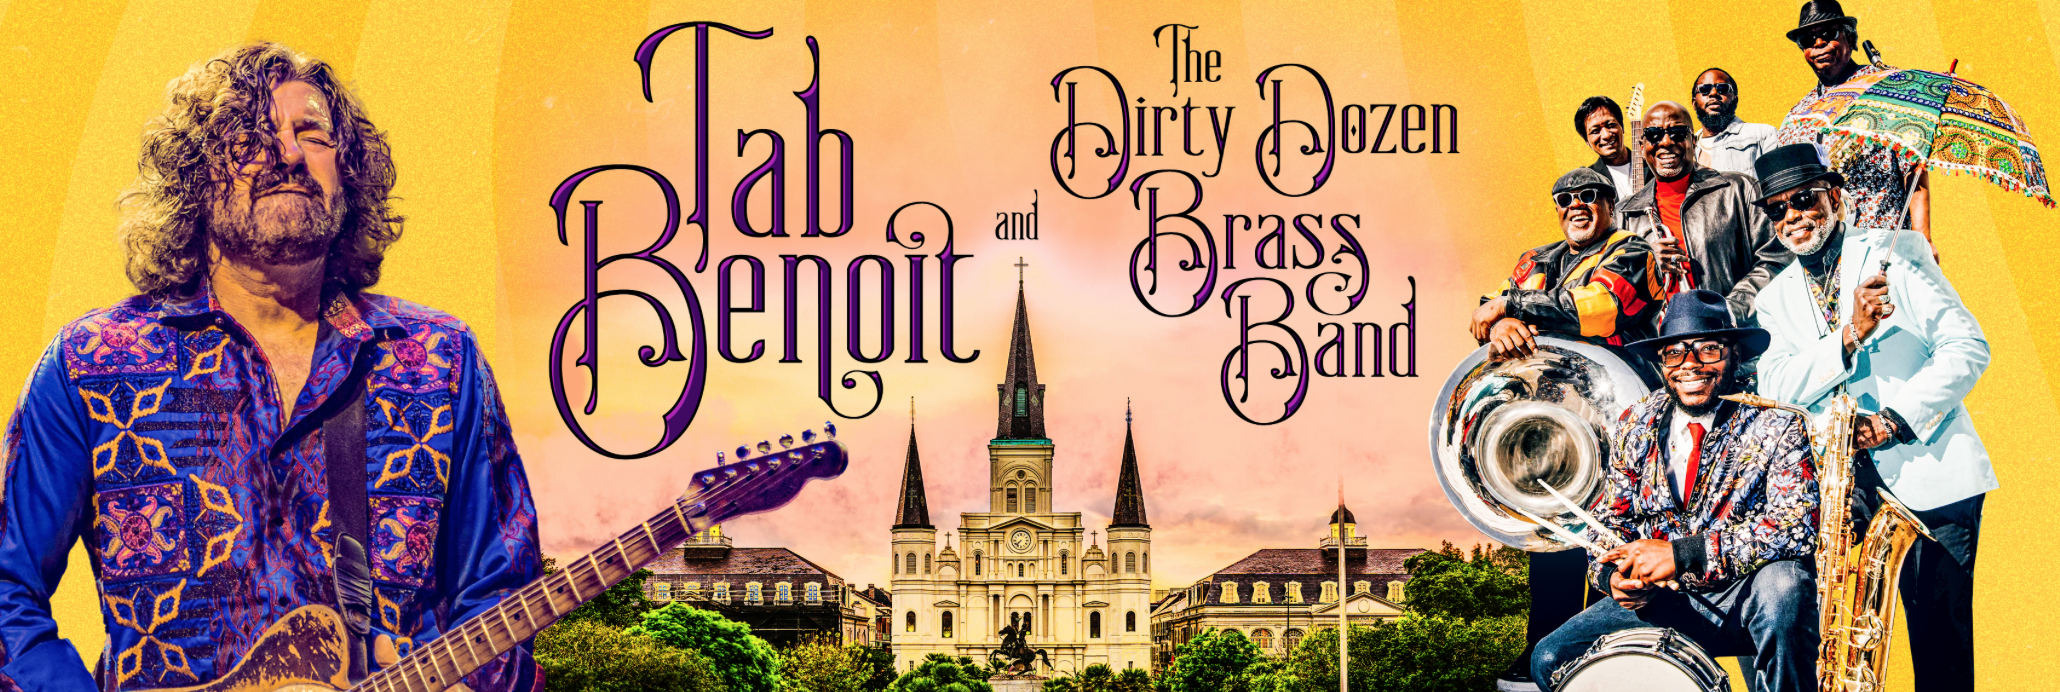 Tab Benoit & The Dirty Dozen Brass Band